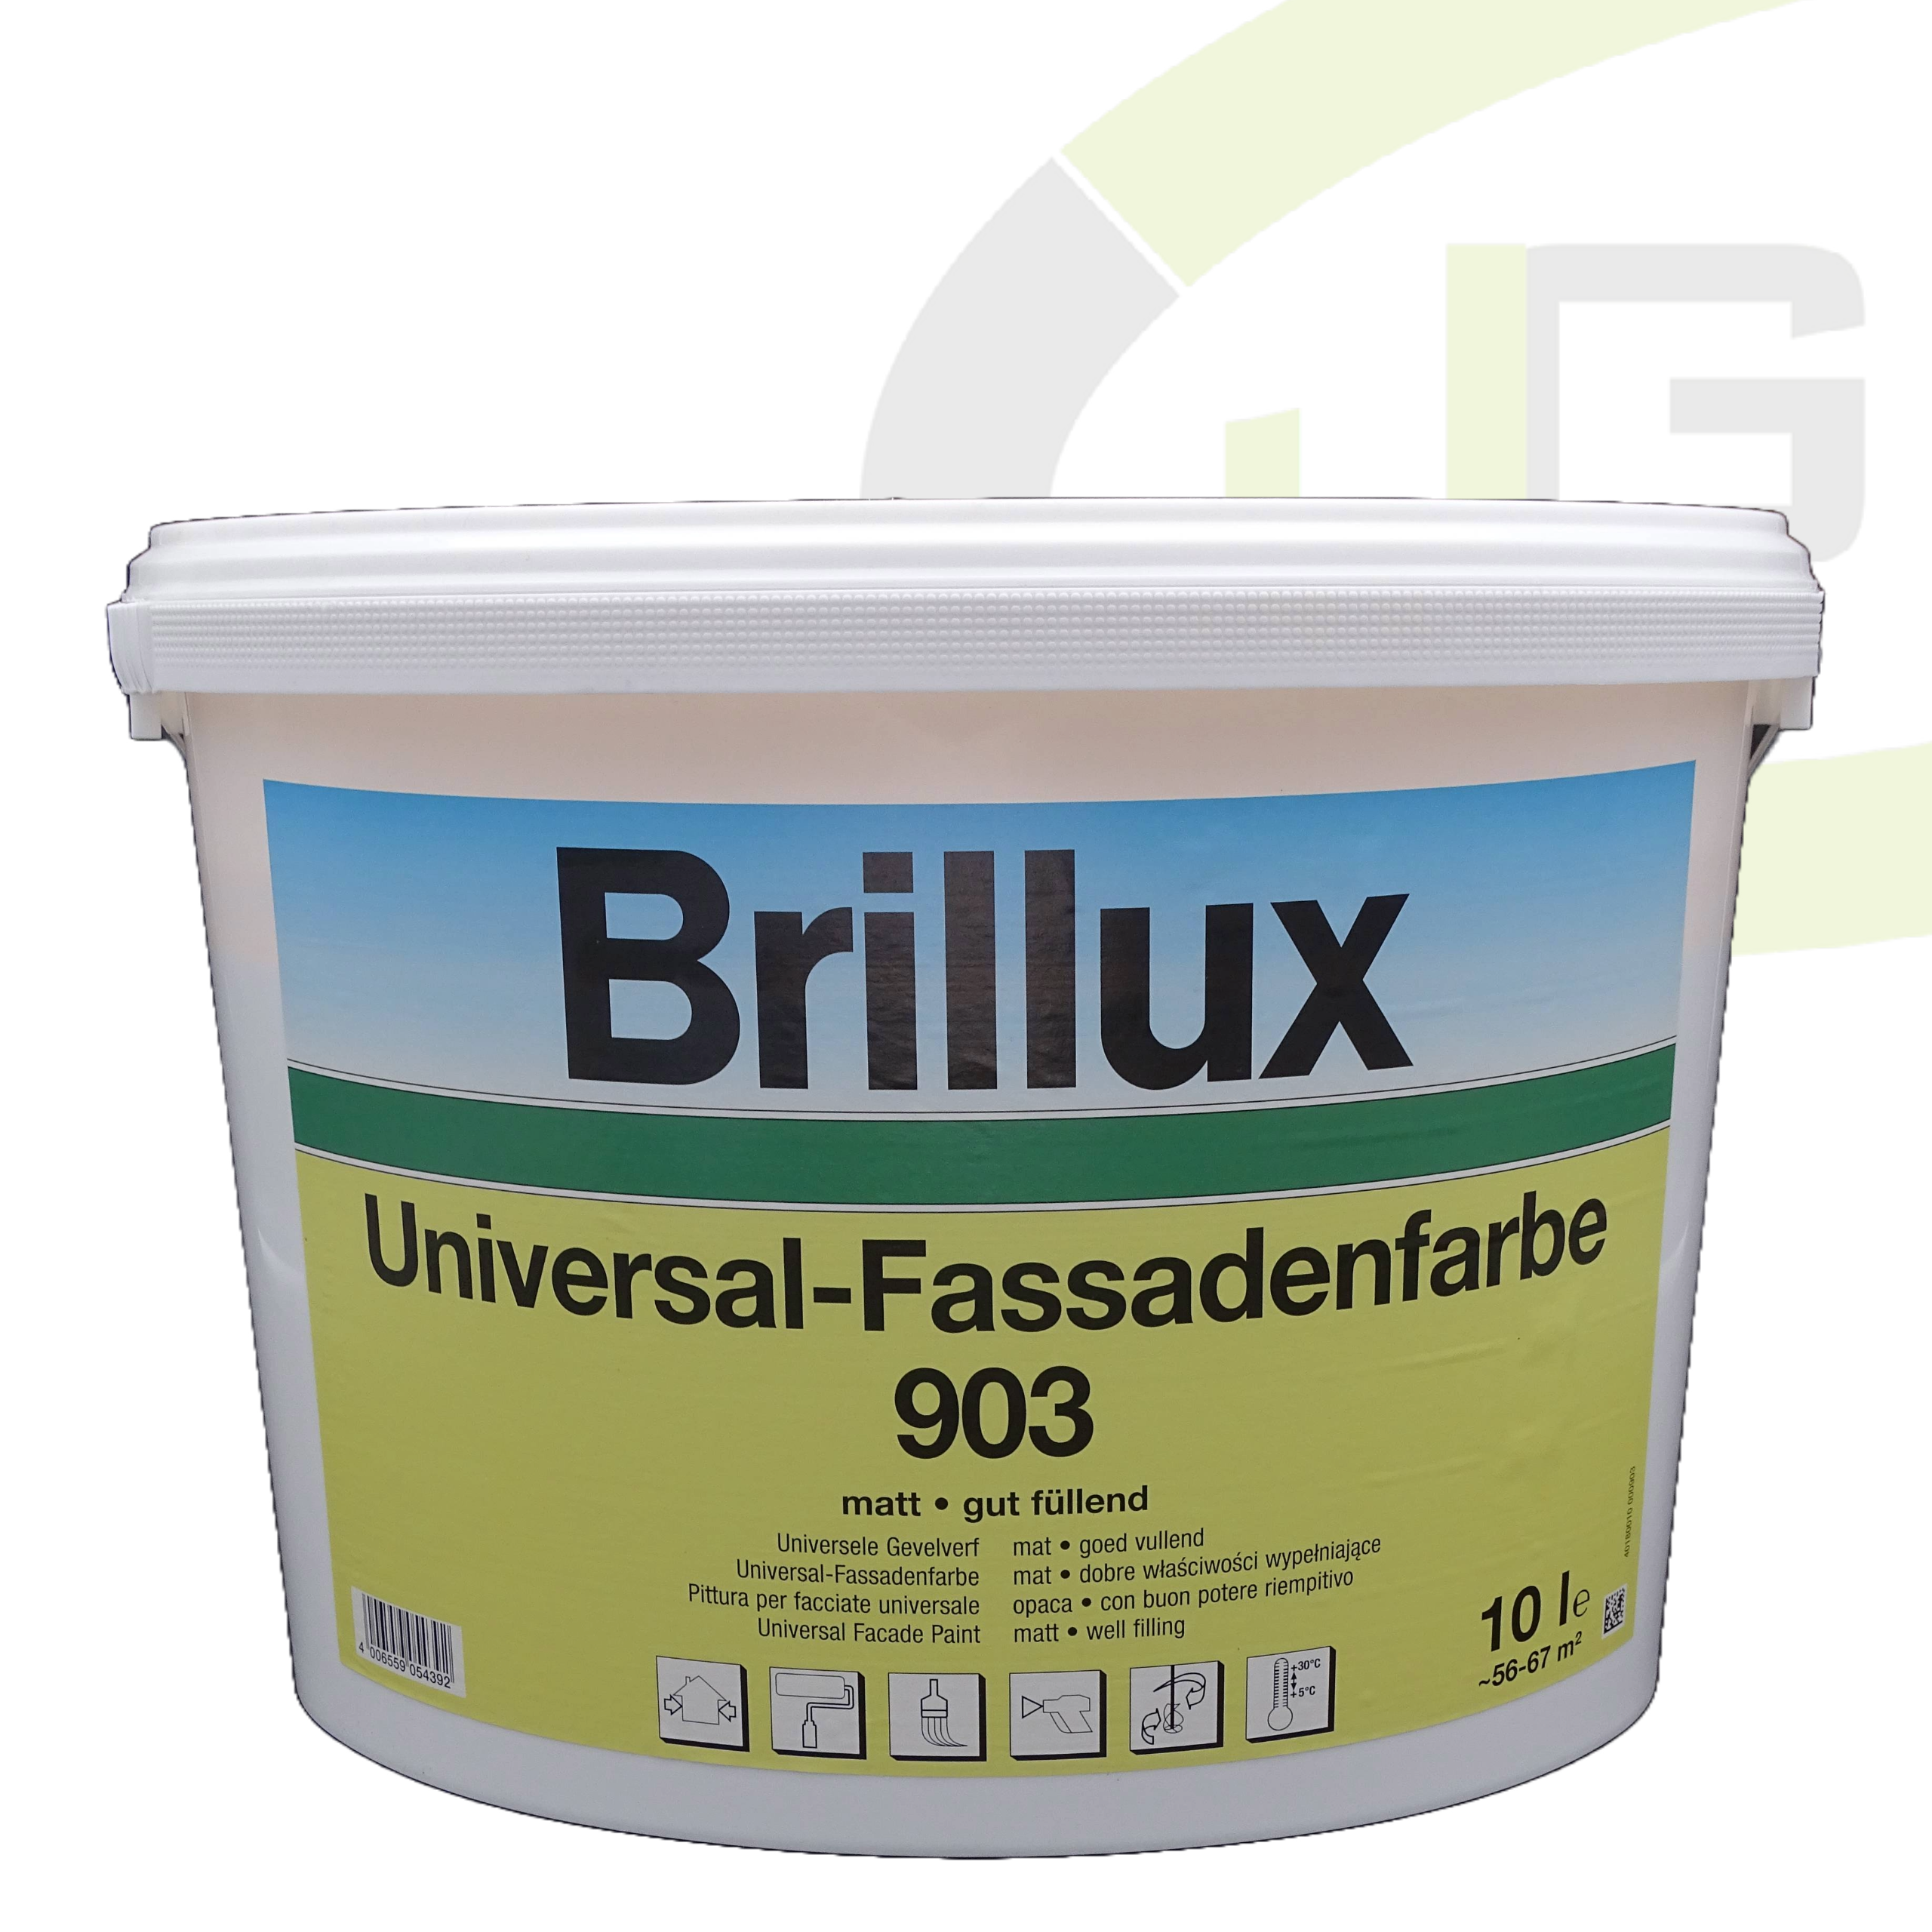 Brillux Universal-Fassadenfarbe 903 weiß - 10.00 LTR / Fassadenfarbe